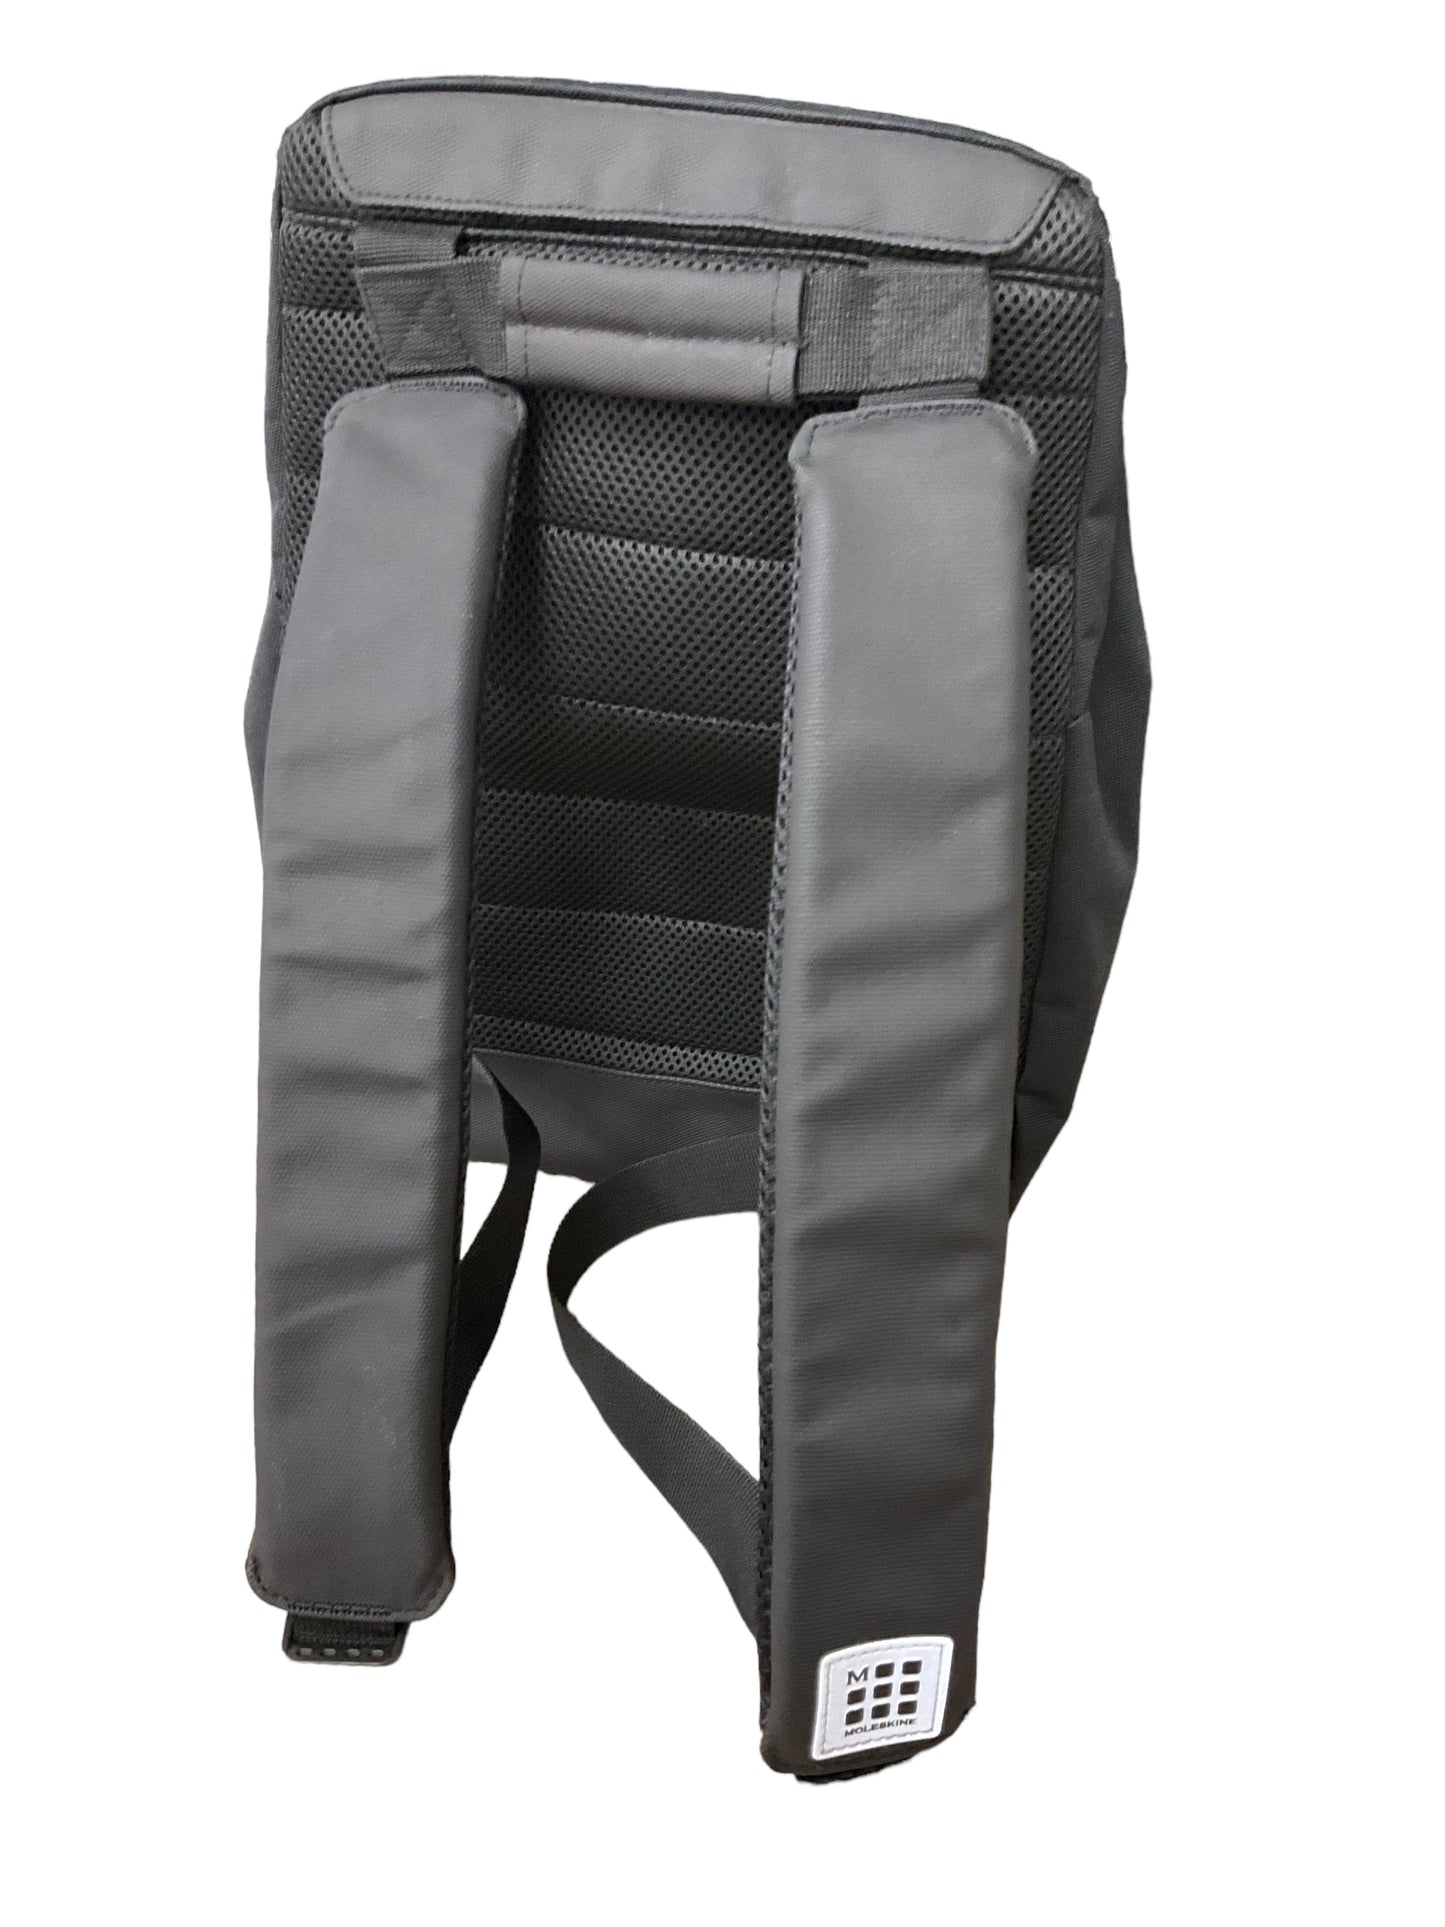 Backpack By Cma  Size: Medium